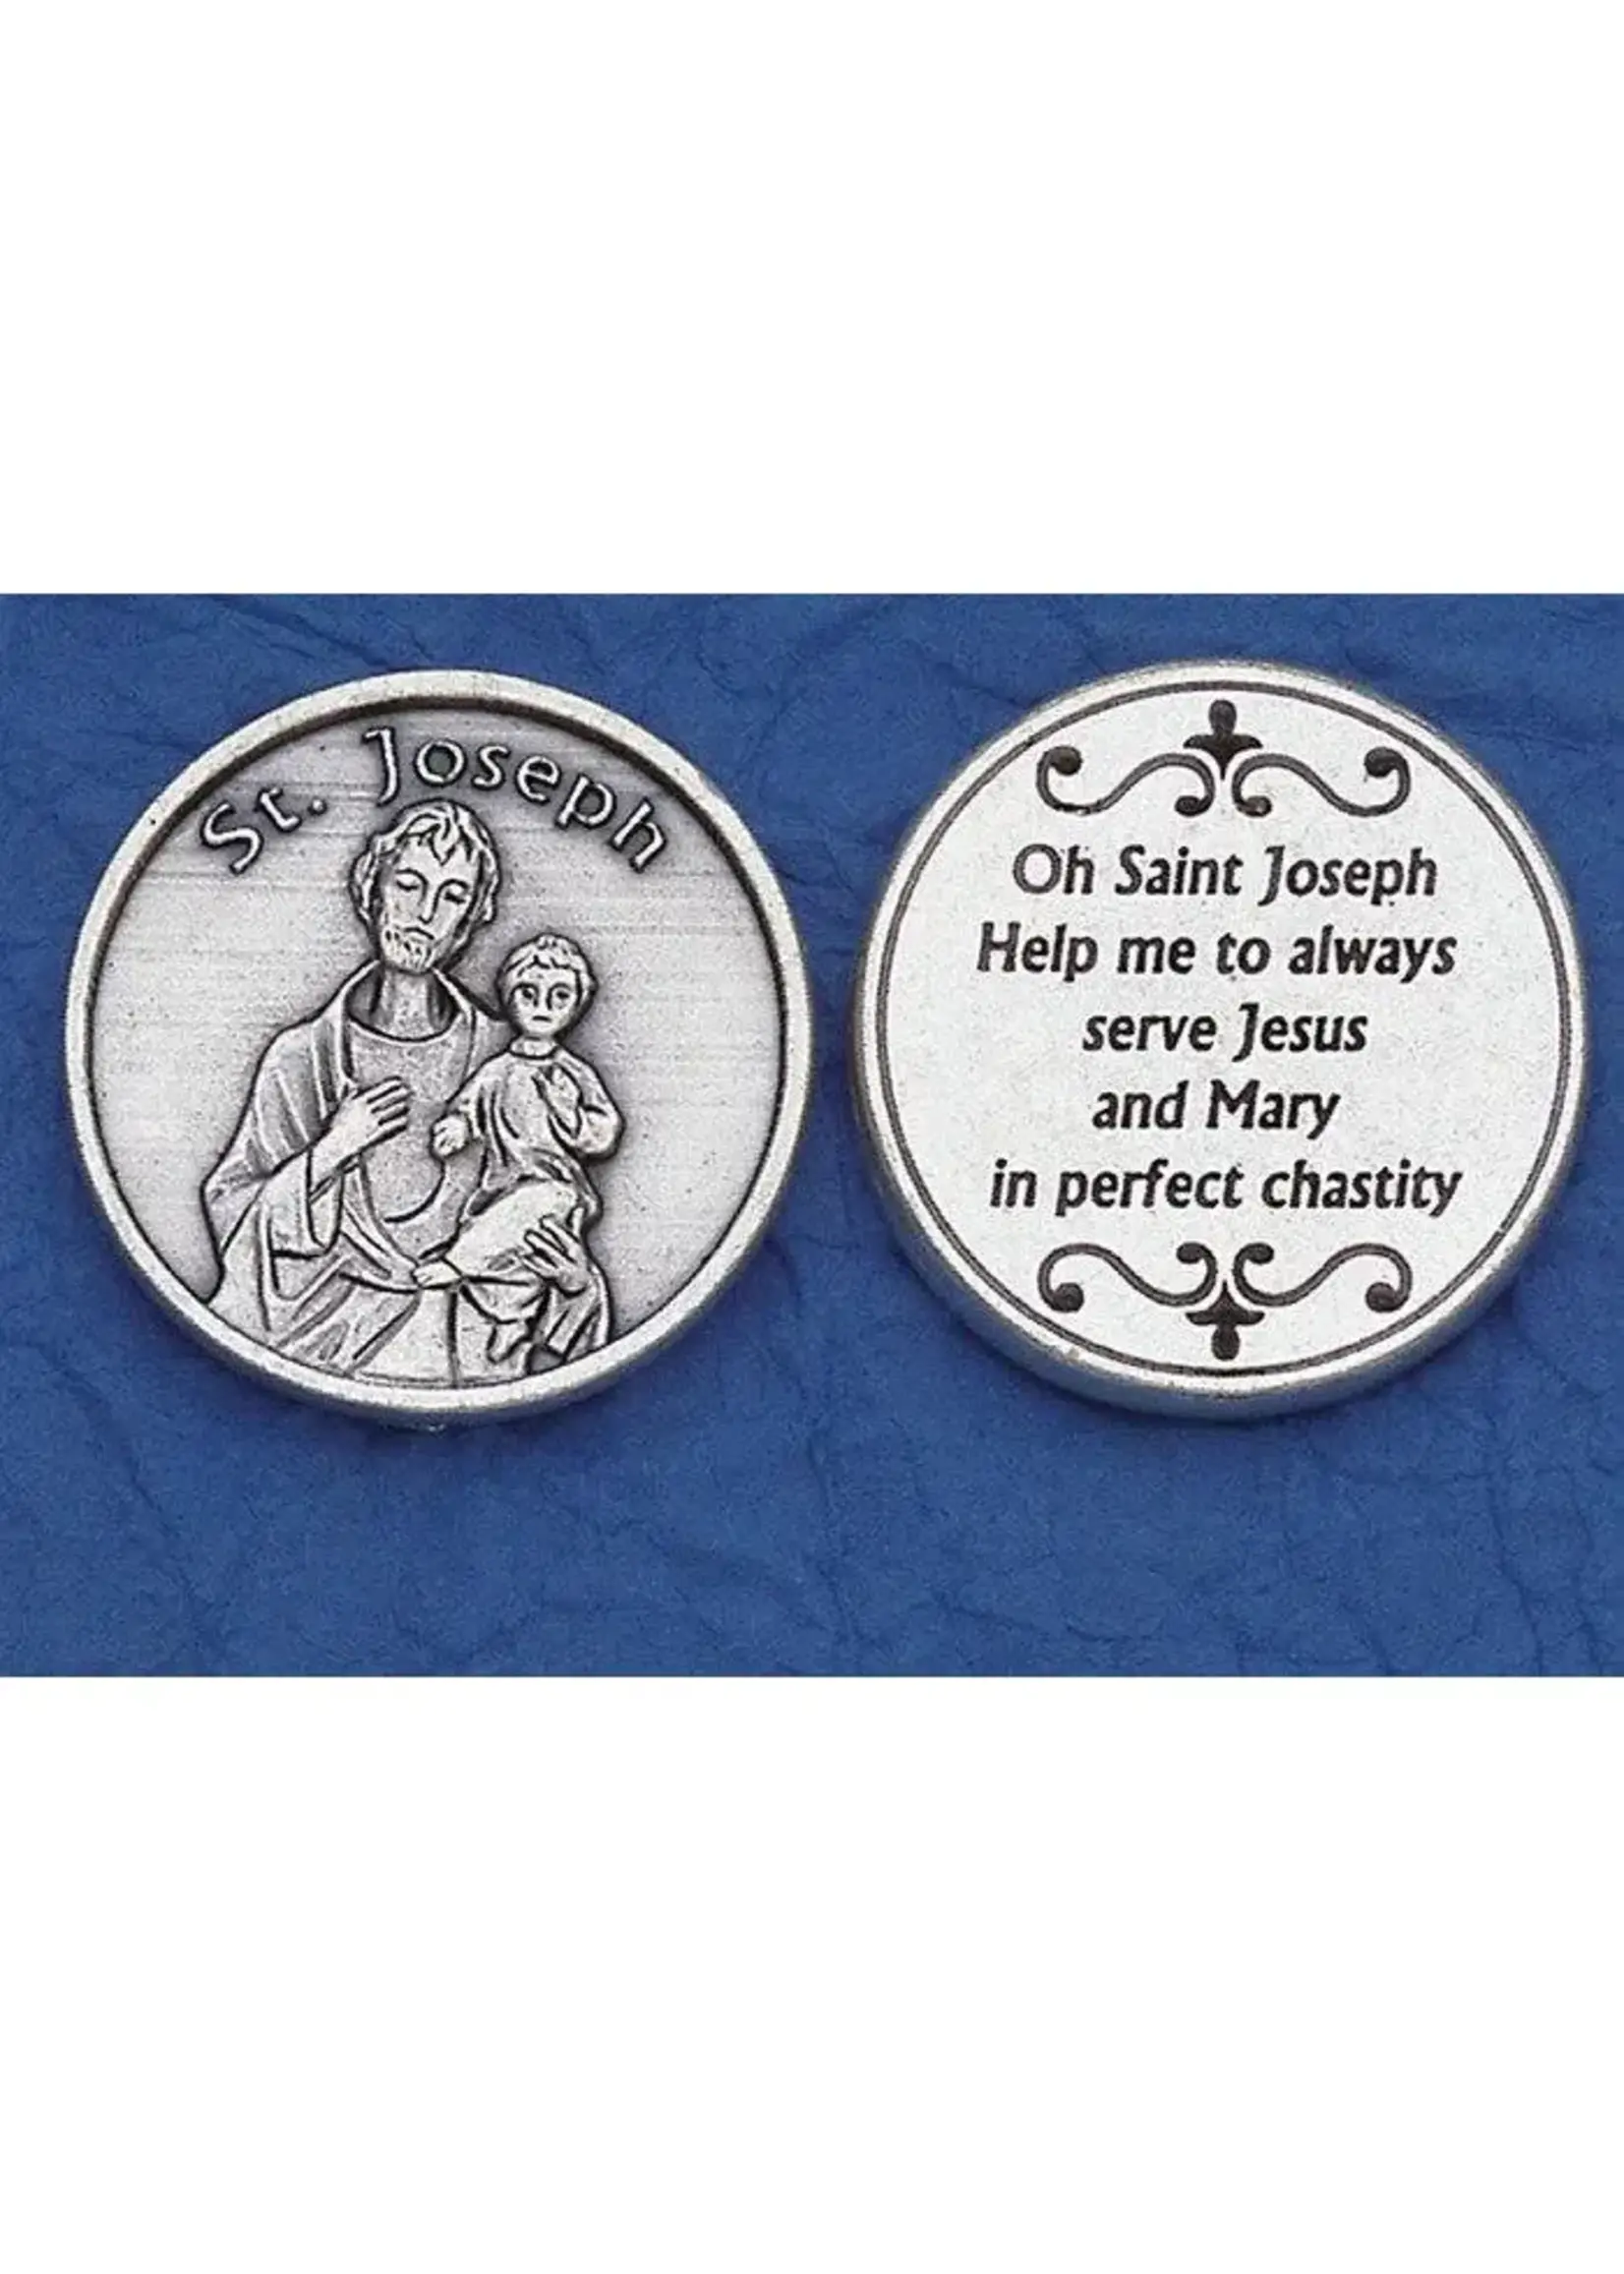 Saint Joseph pocket prayer token/coin